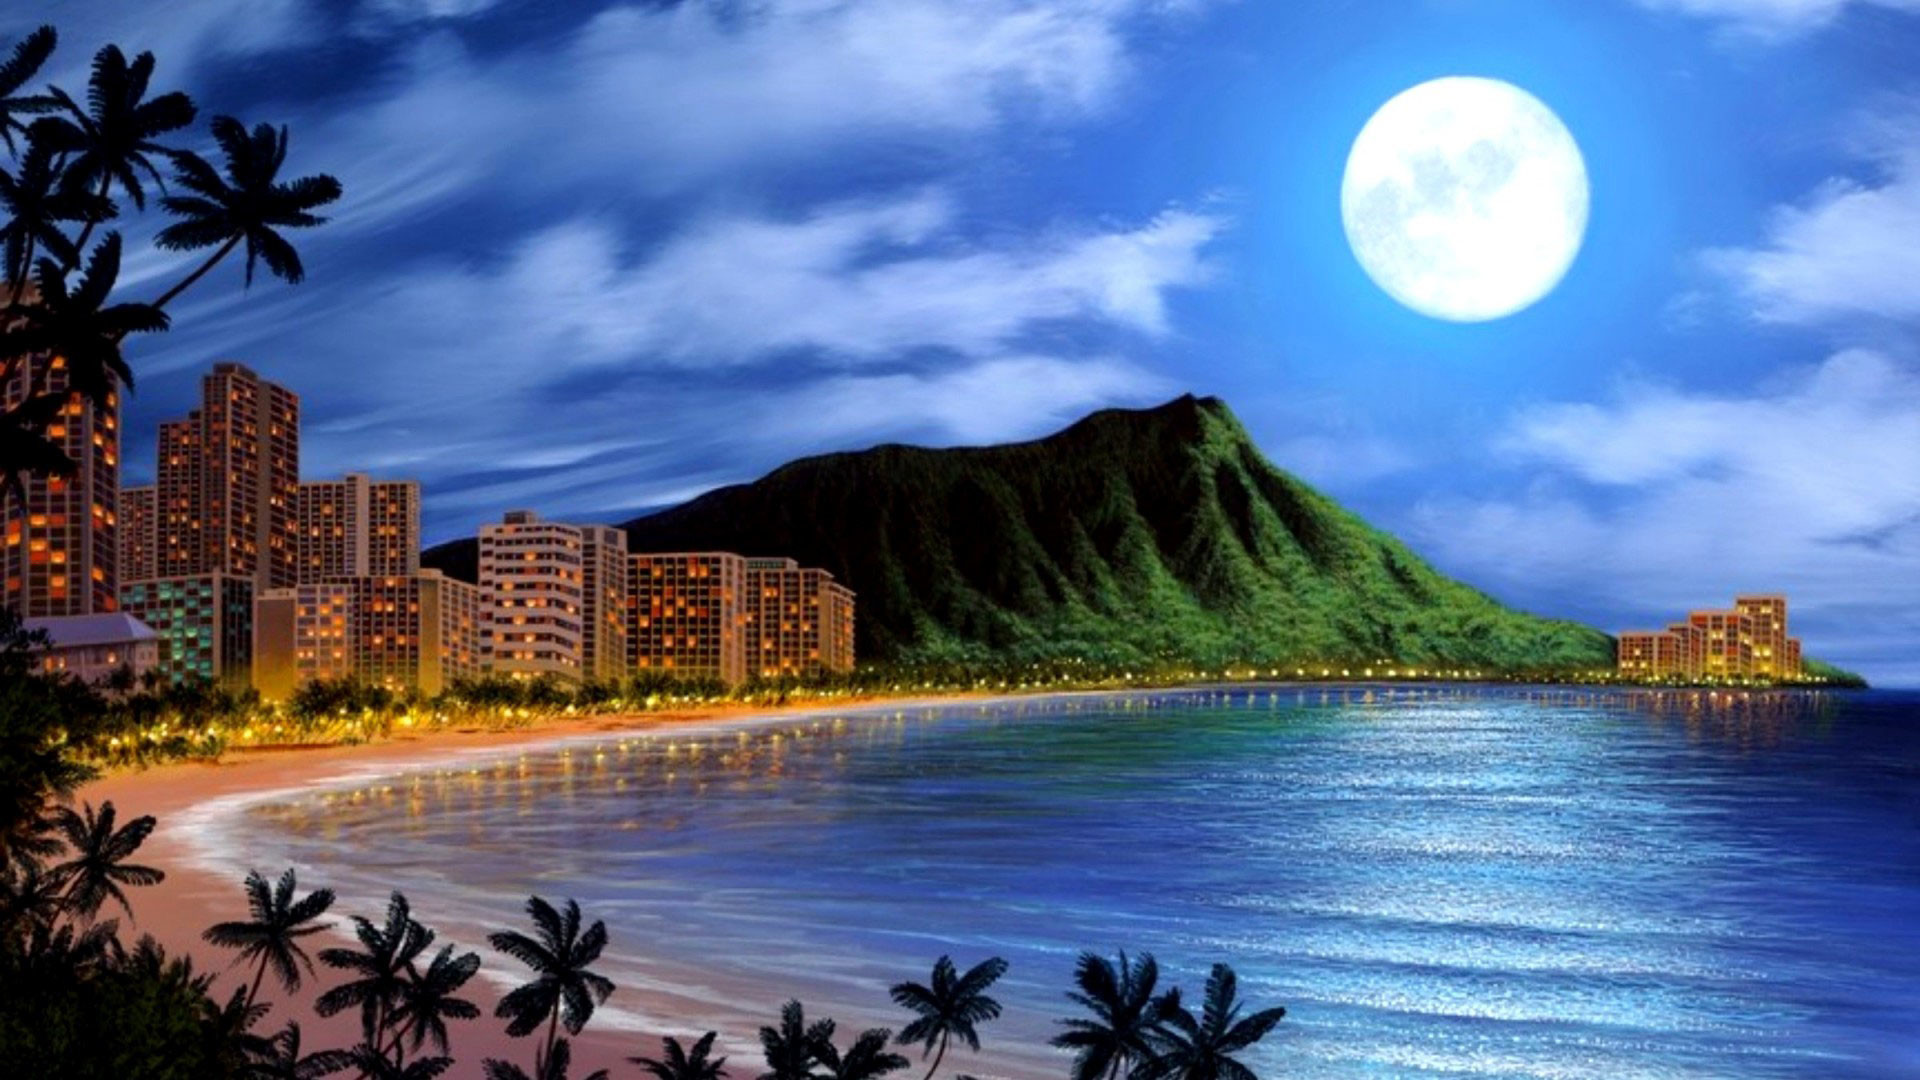 1920x1080 hd pics photos awesome beach buildings night sea moon nice hd quality desktop  background wallpaper